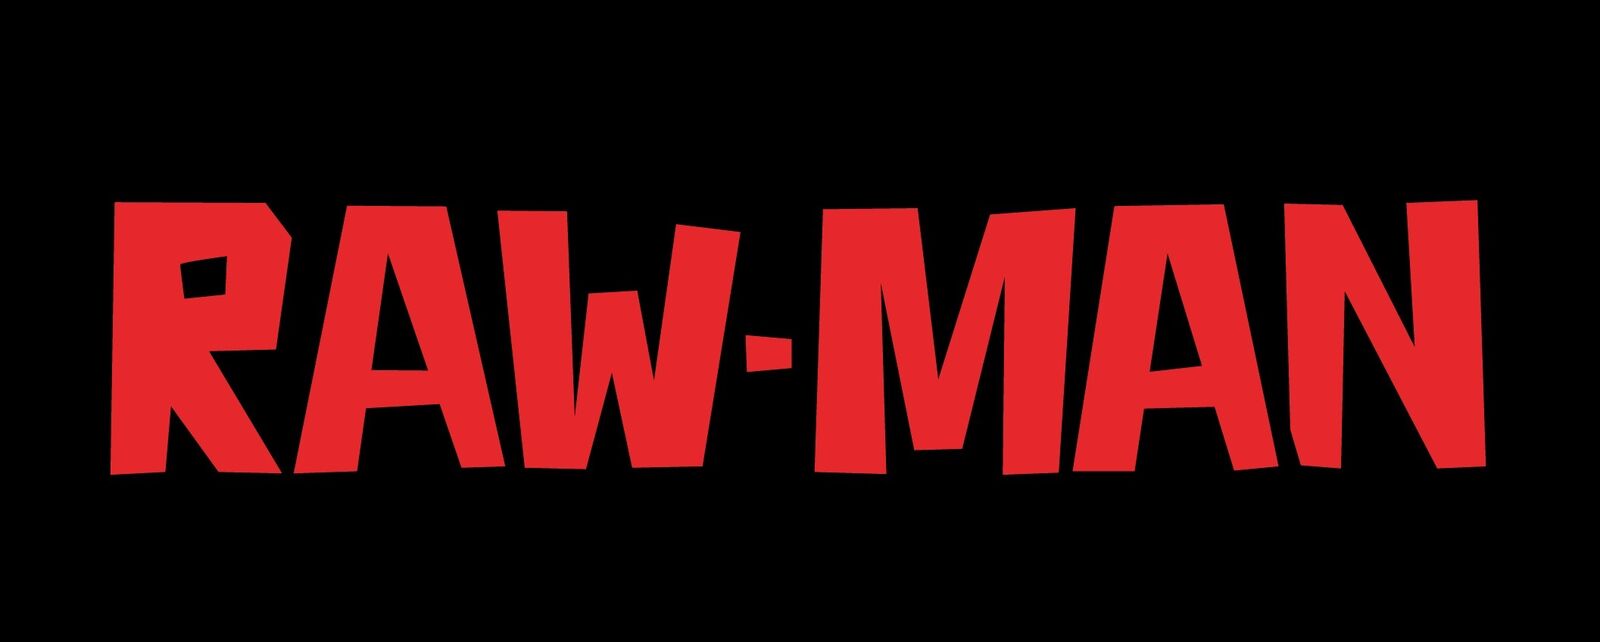 See Raw Man profile